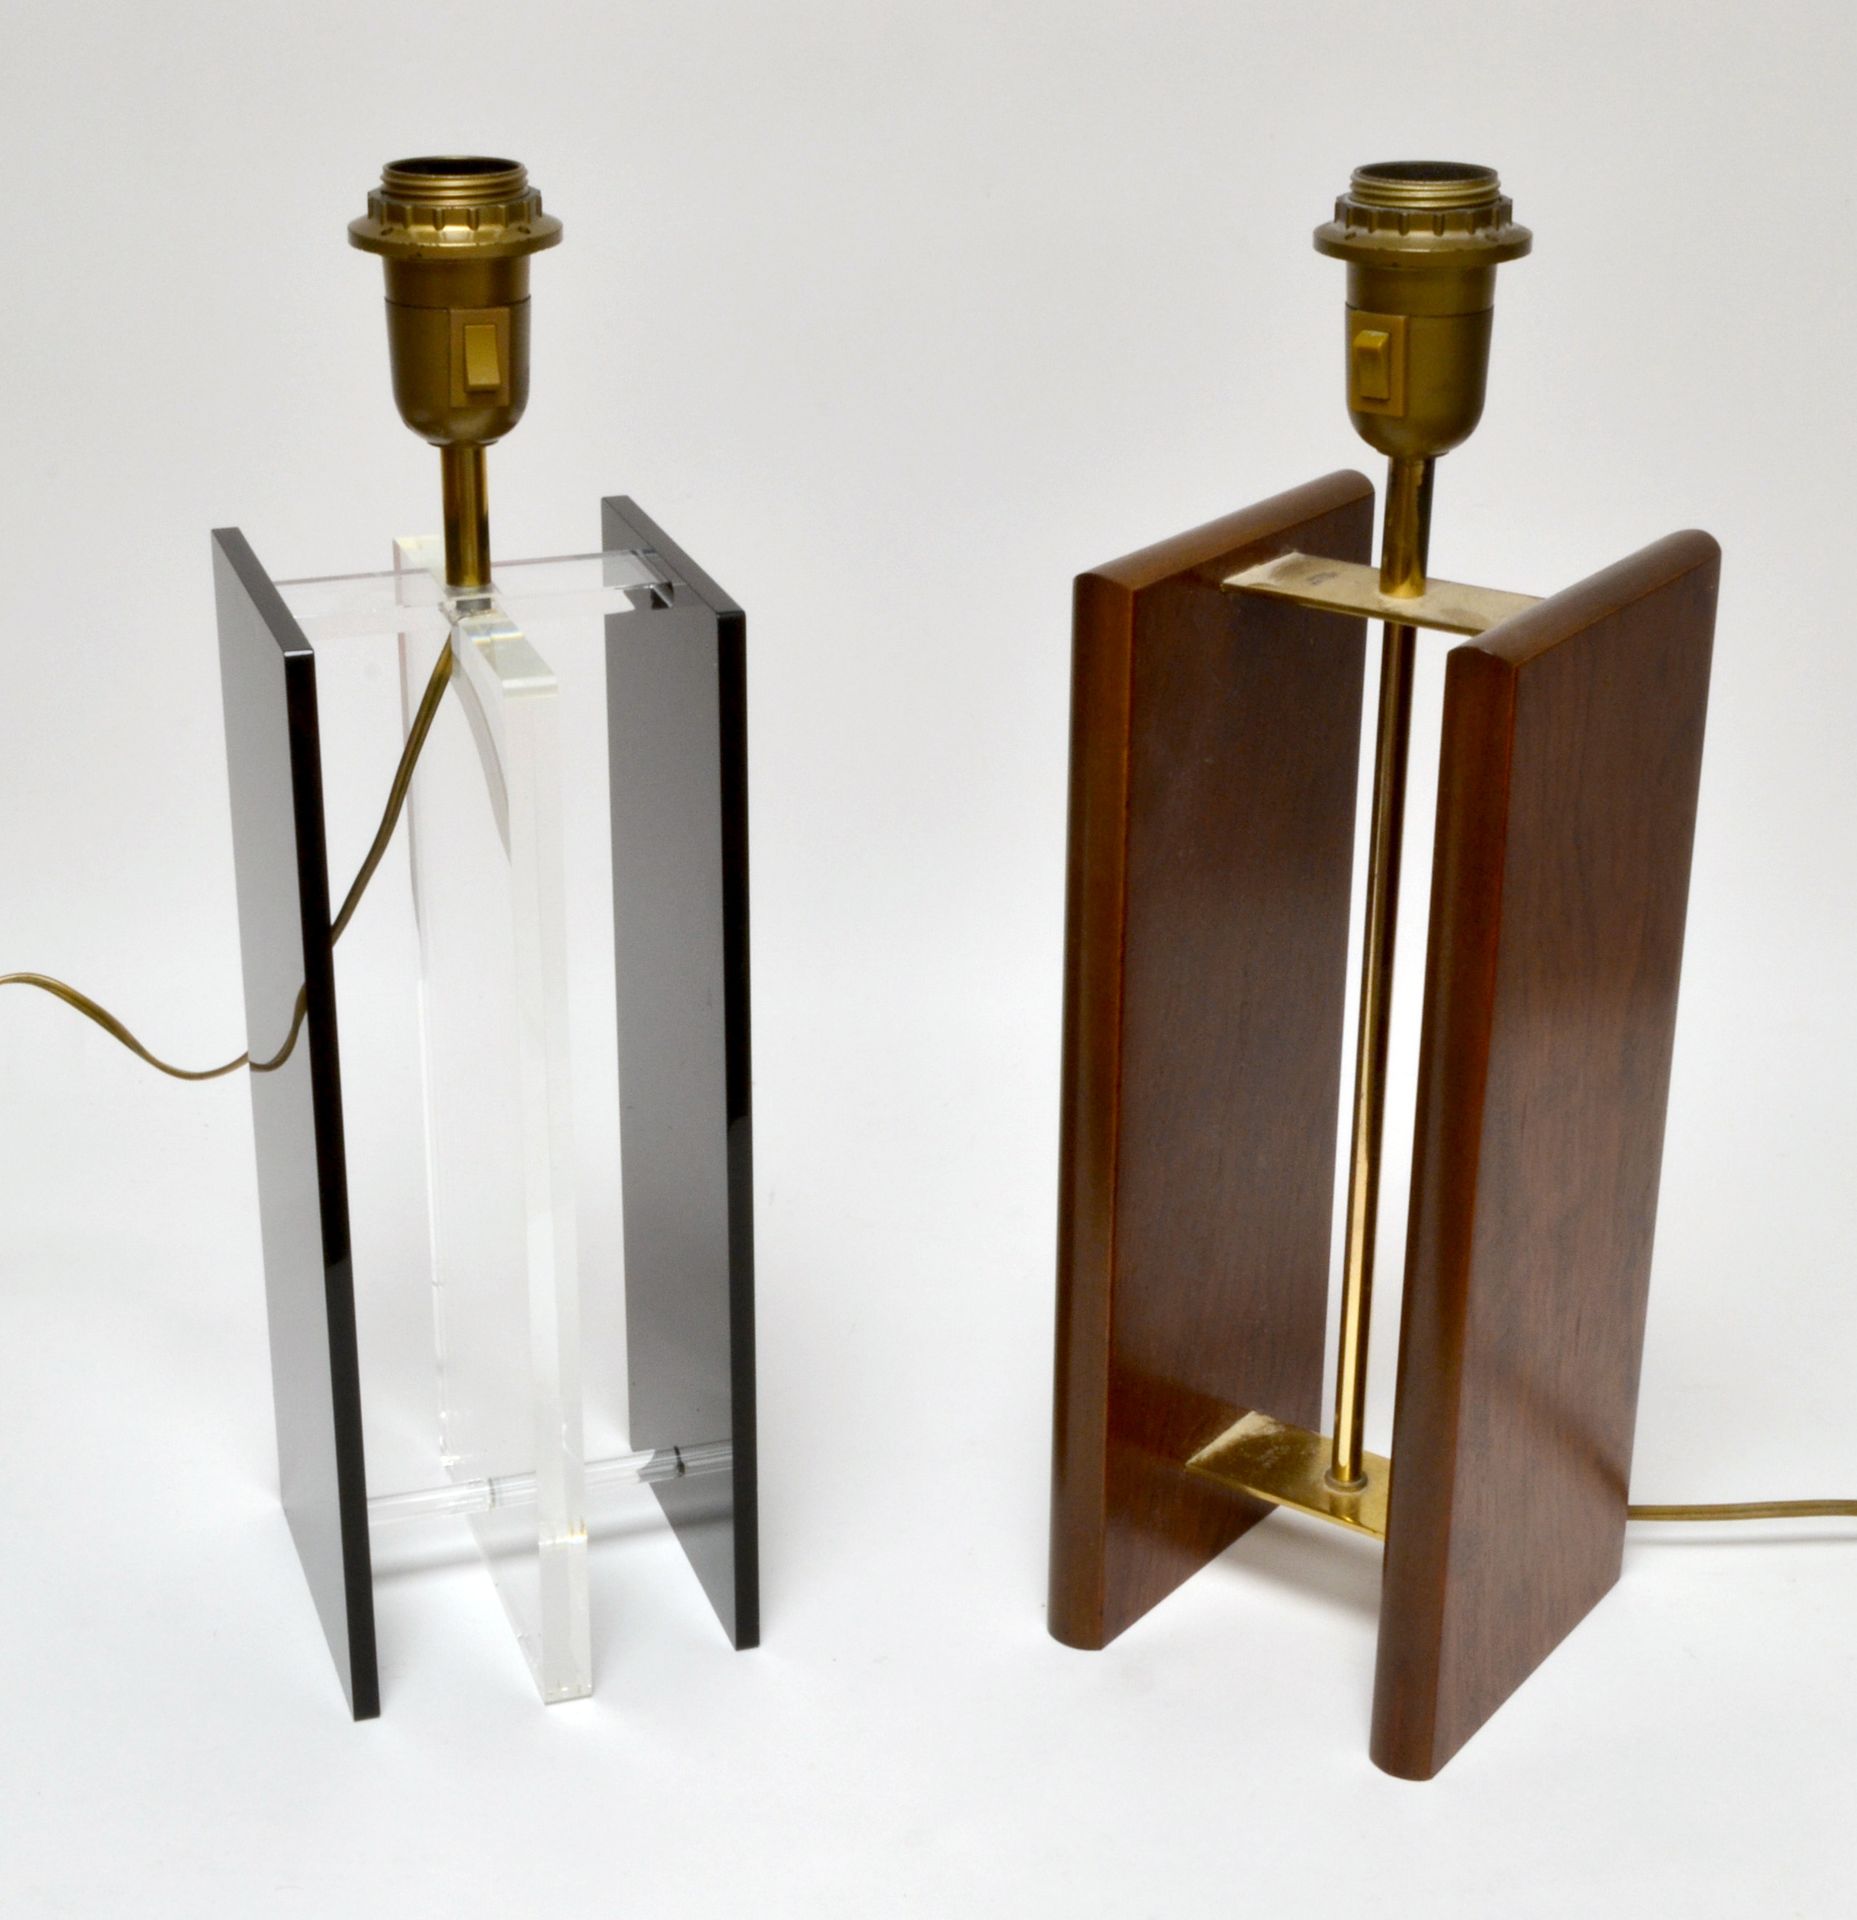 Null 乔治-朱埃，1931年出生。两个灯腿，一个是毛刺胡桃木和镀金金属条，另一个是透明和黑色有机玻璃。约1970-80年。高42厘米